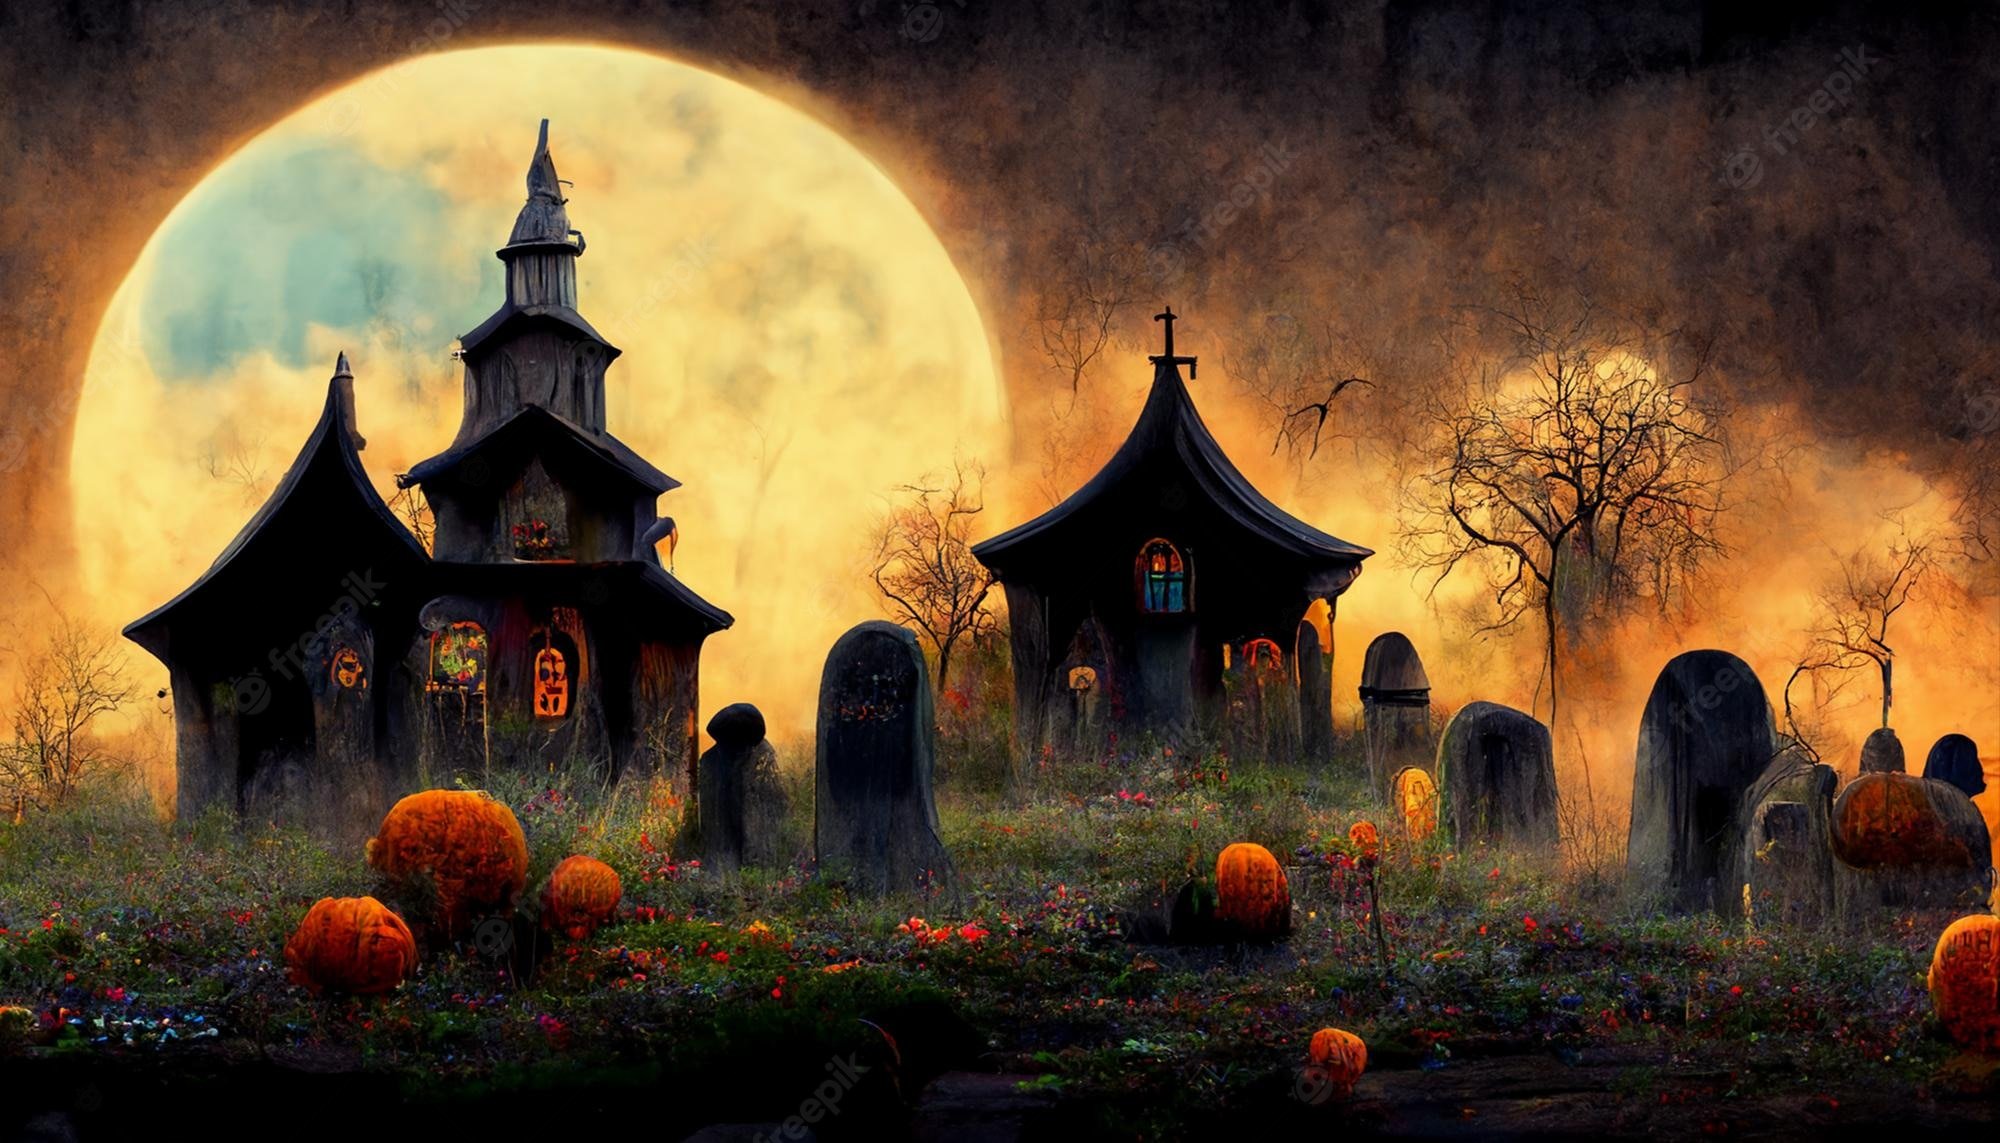 Spooky desktop background Image. Free Vectors, & PSD